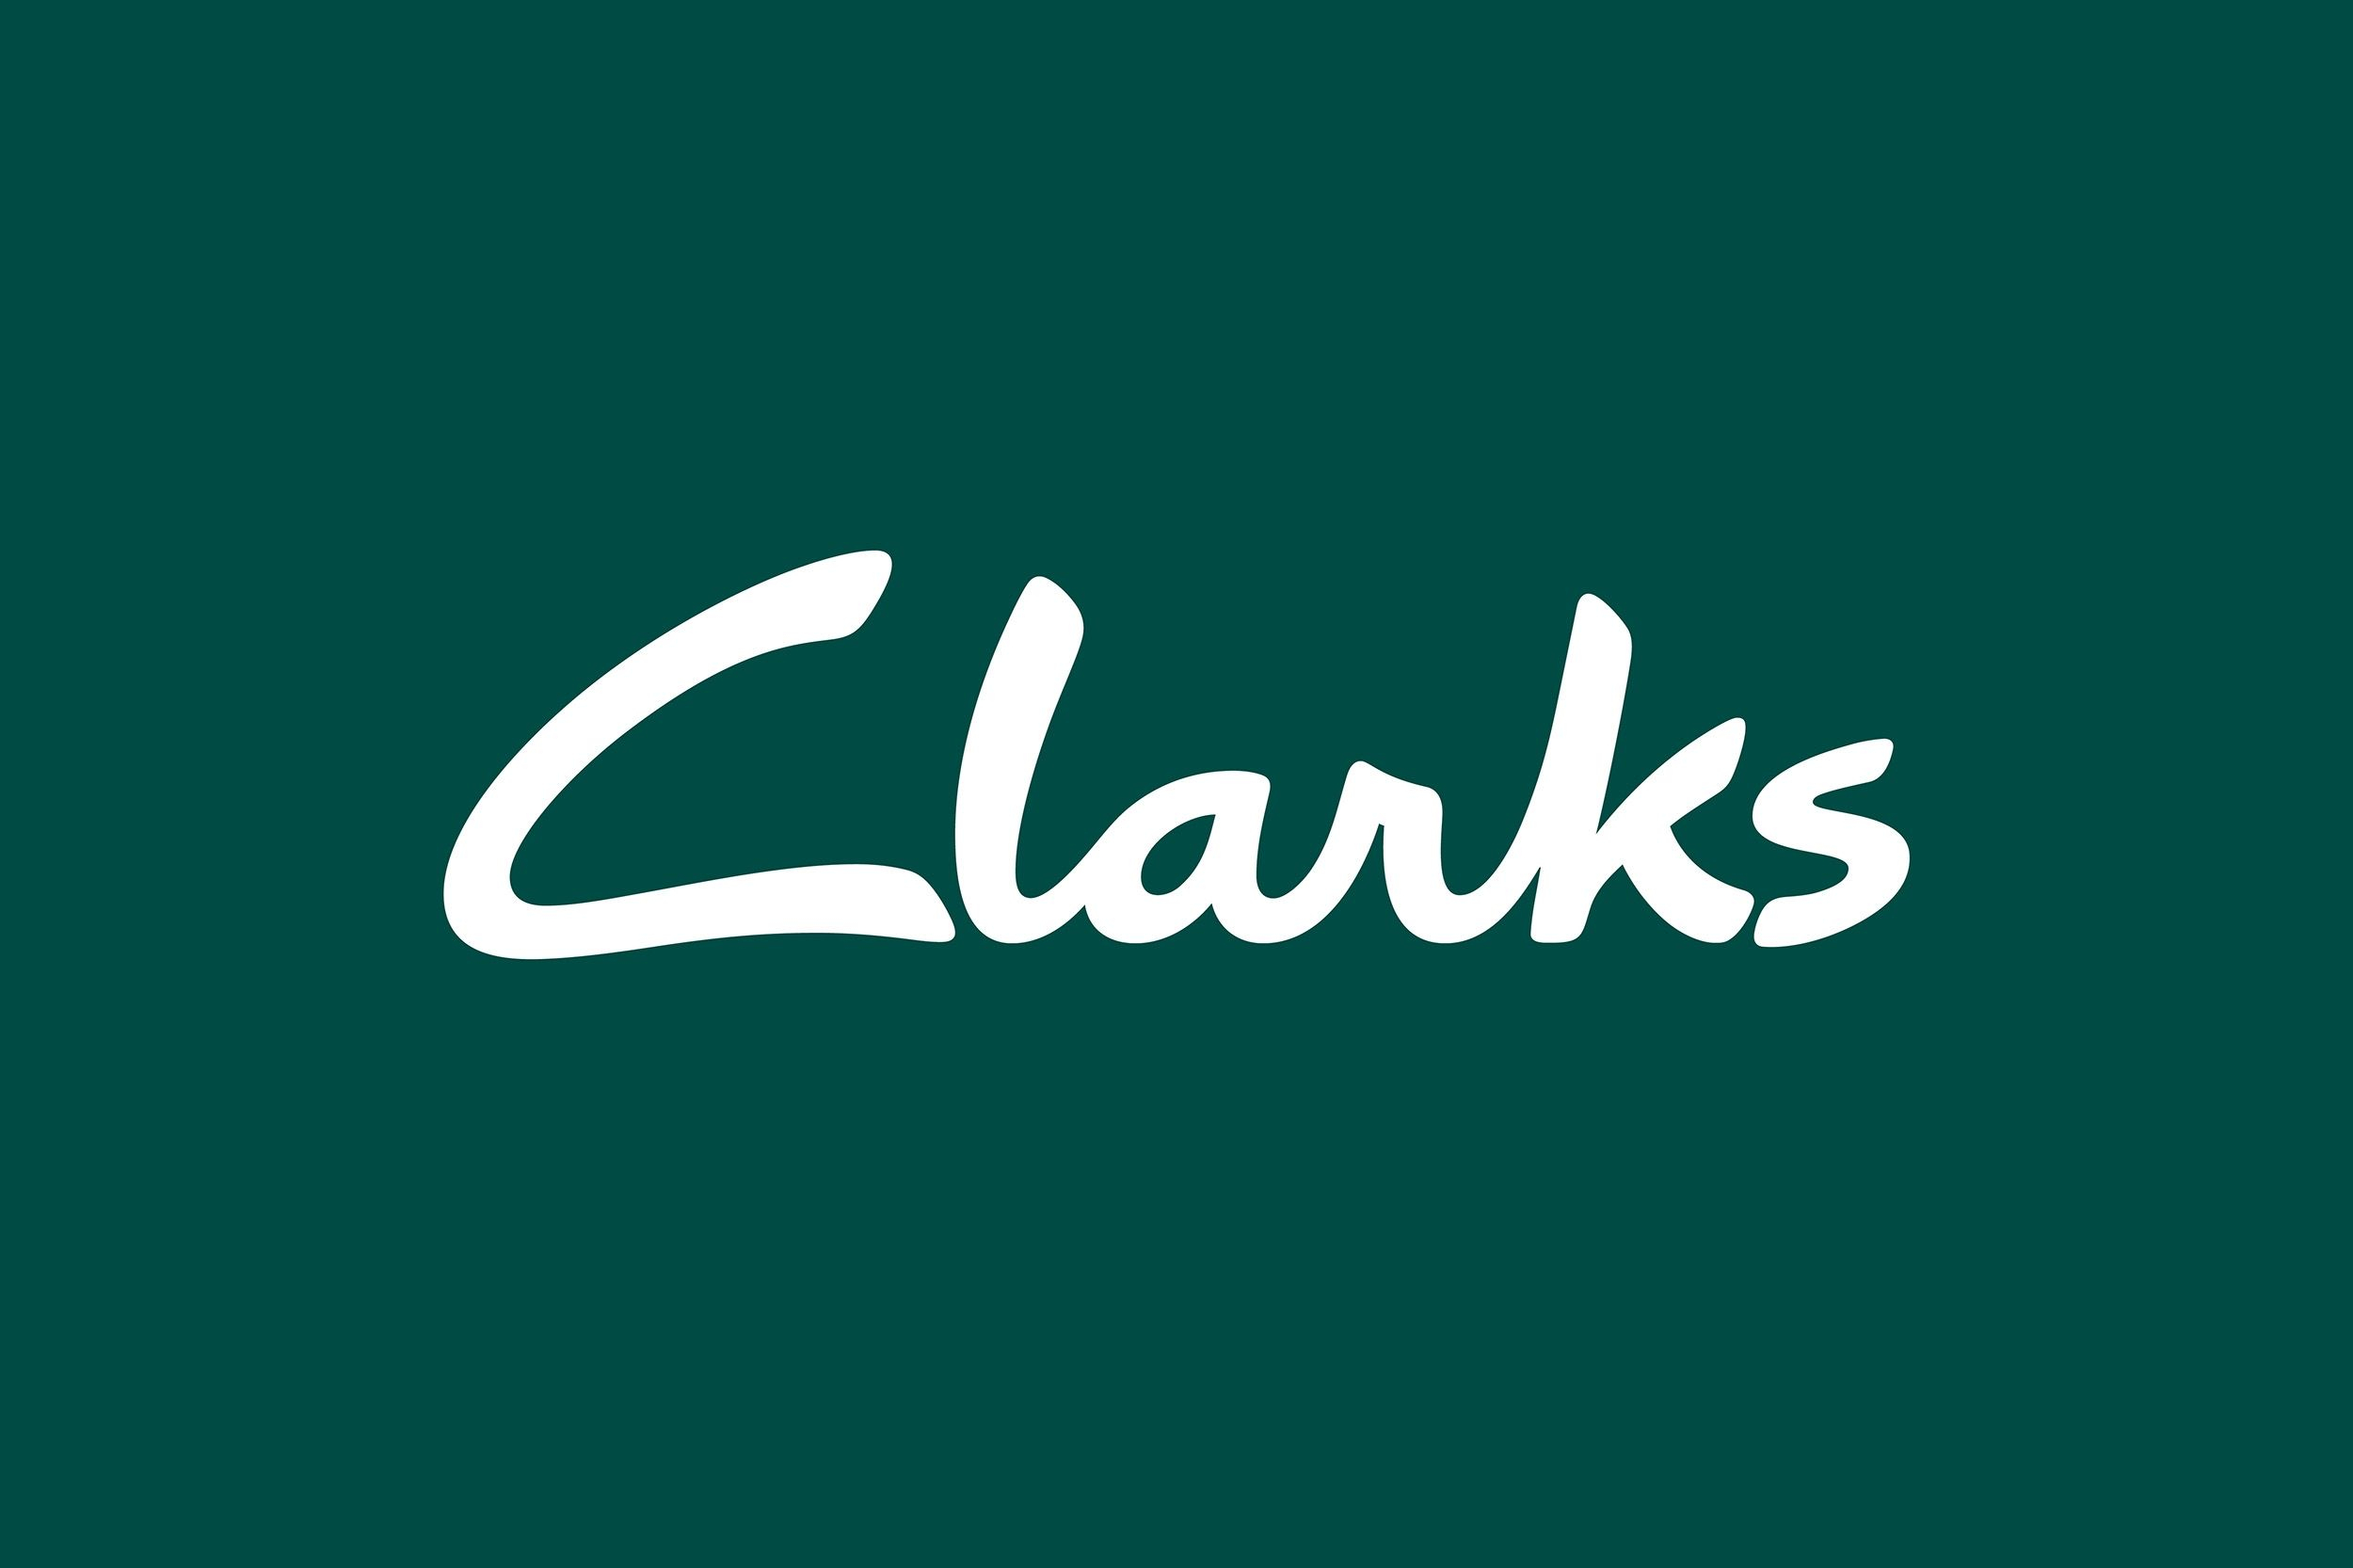 clarks discount code april 2019